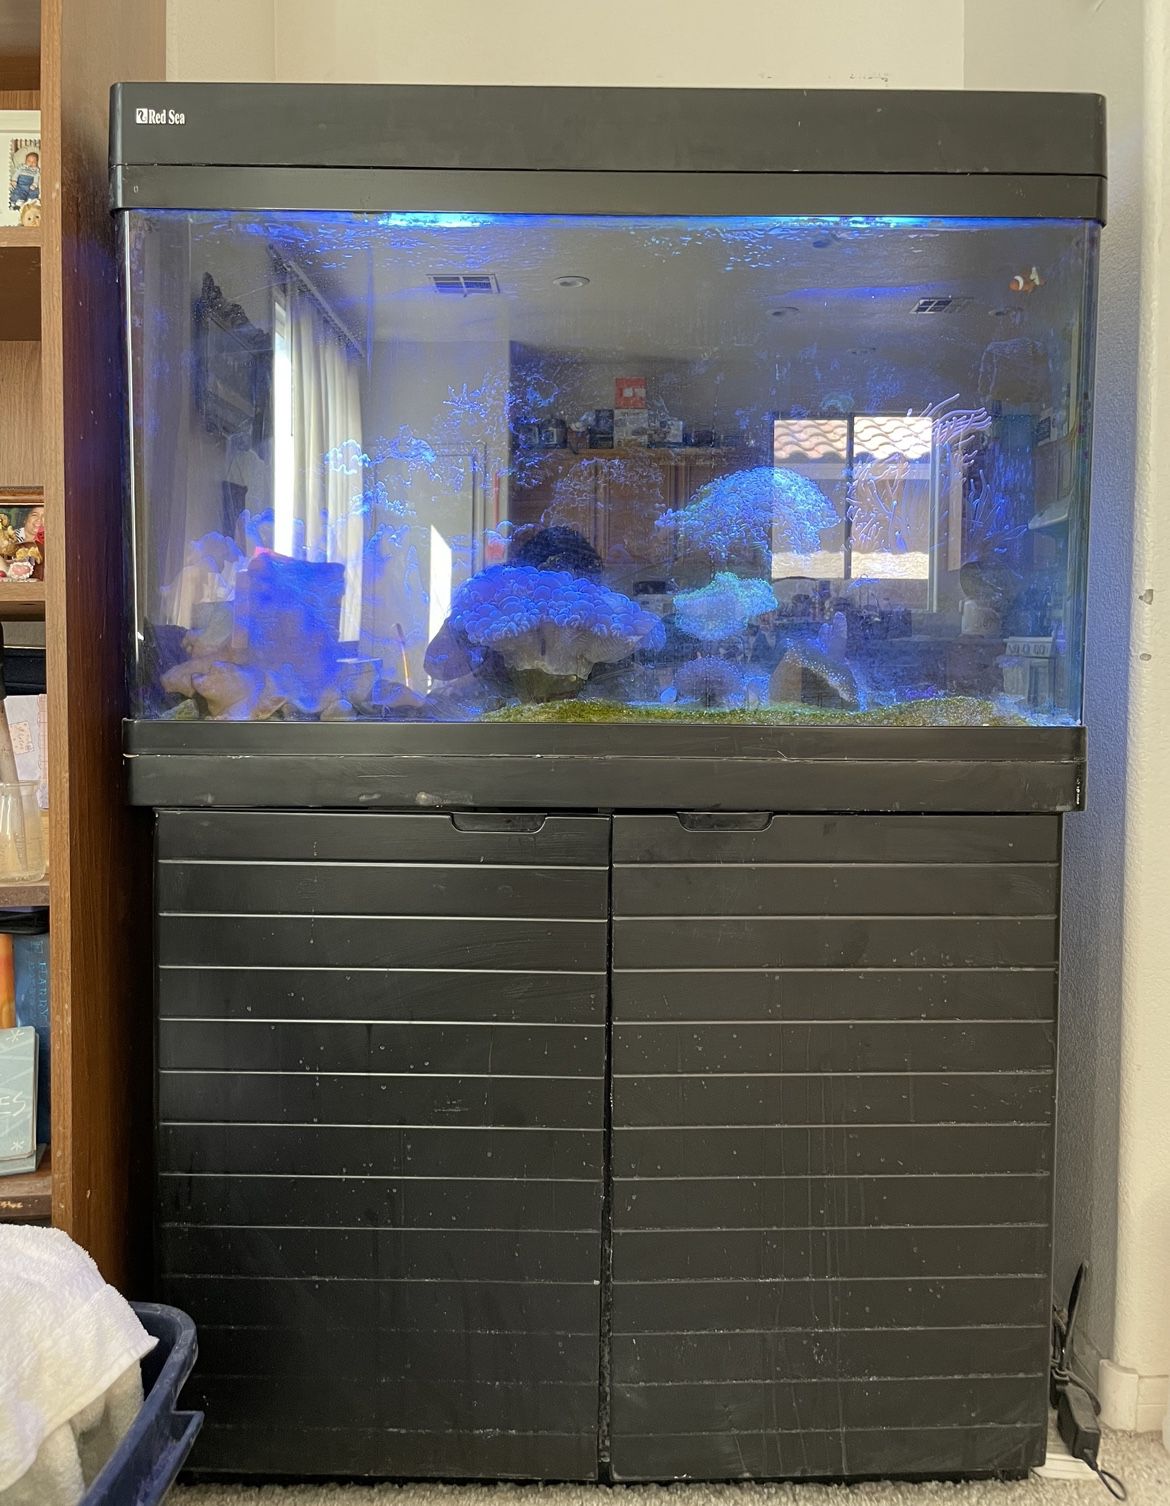 Red Sea Salt Water Fish Tank